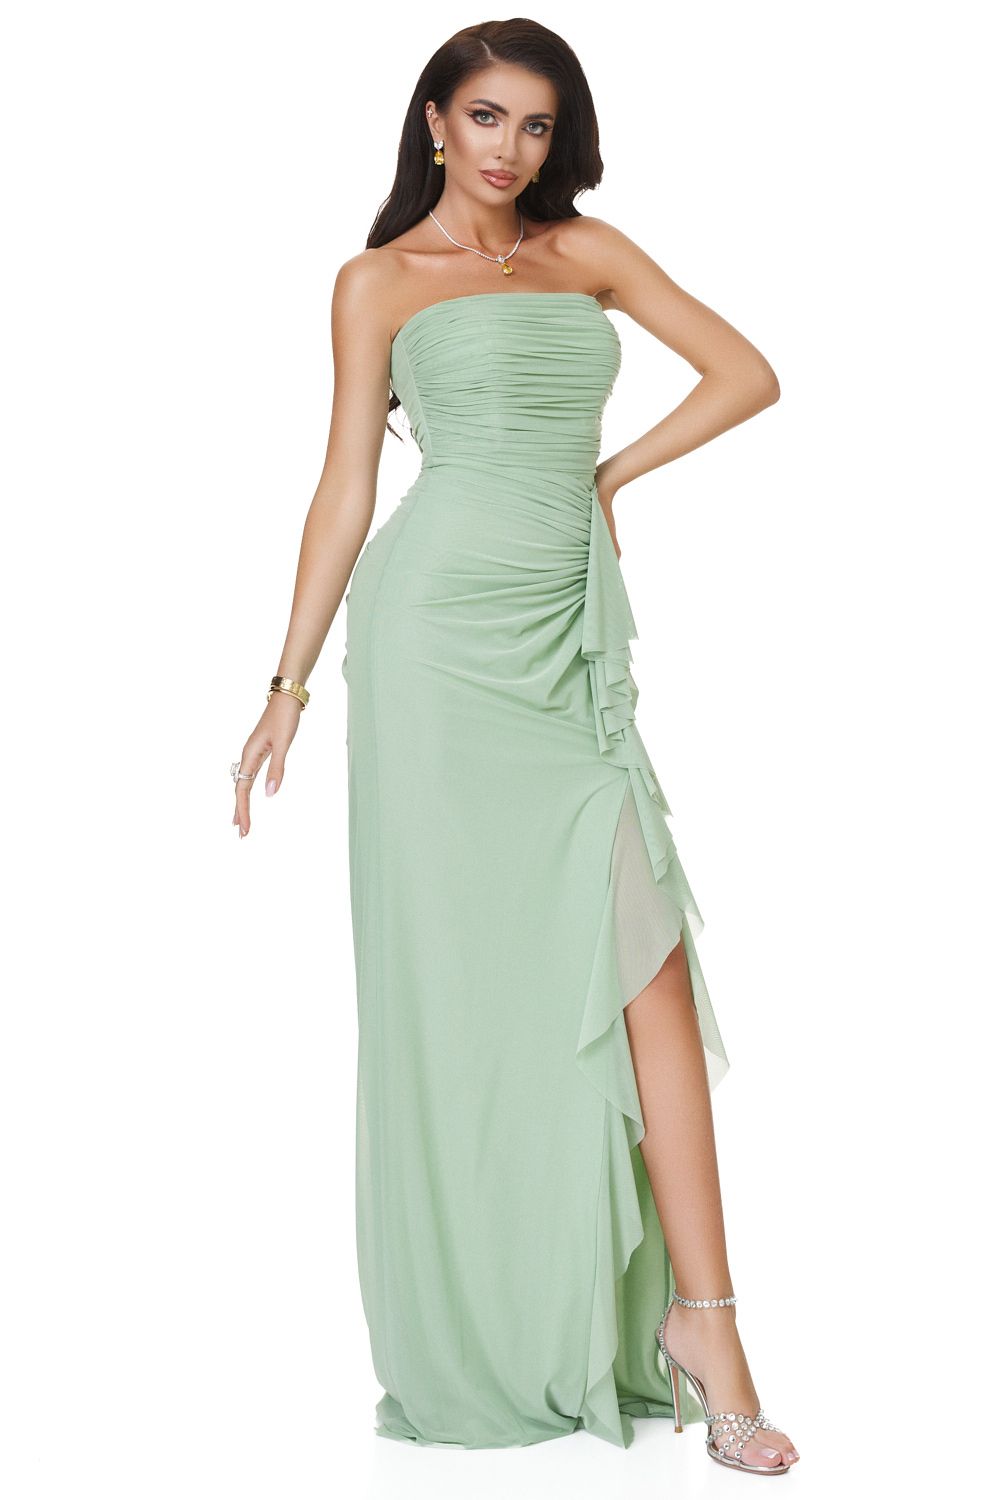 Ladies long dress mint green Petynina Bogas